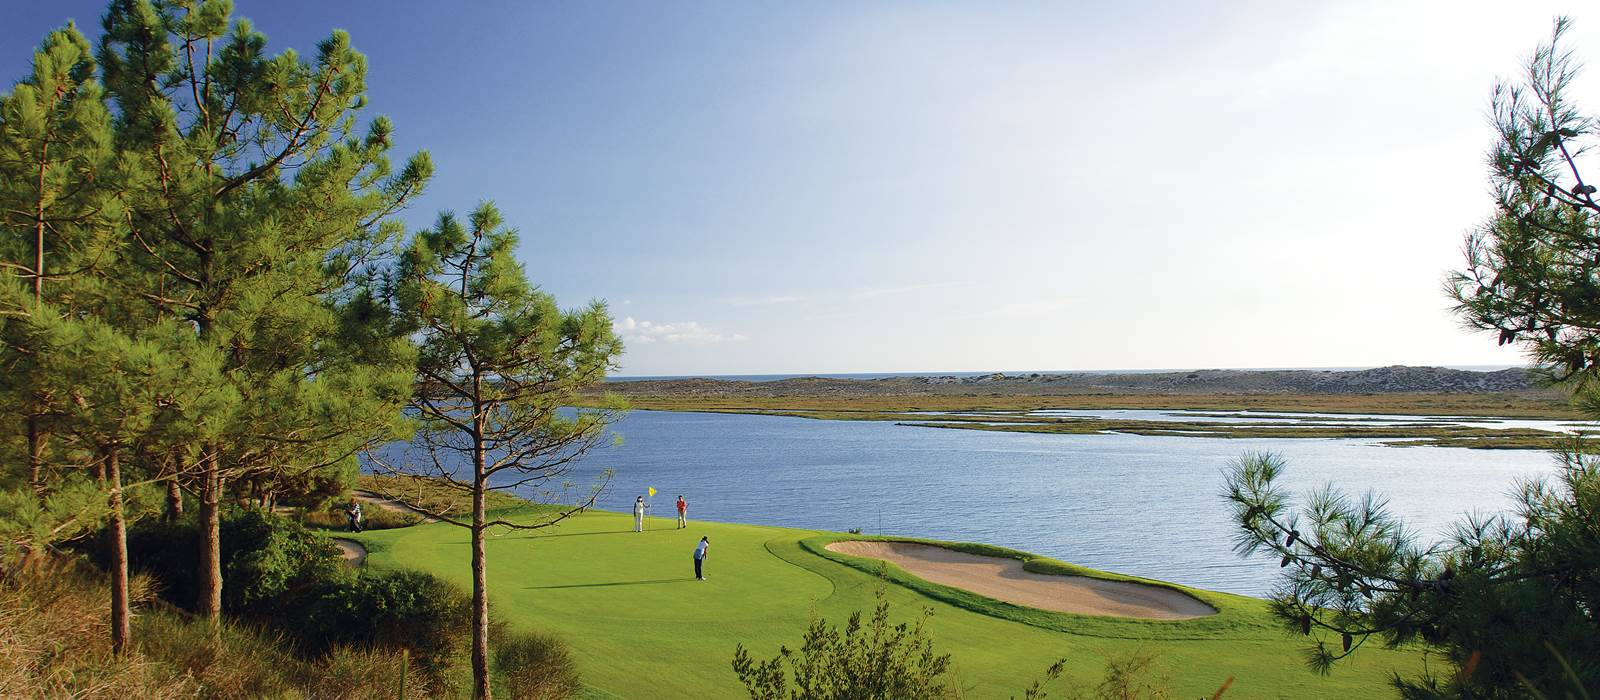 San Lorenzo Golf Course Gallery Image 1